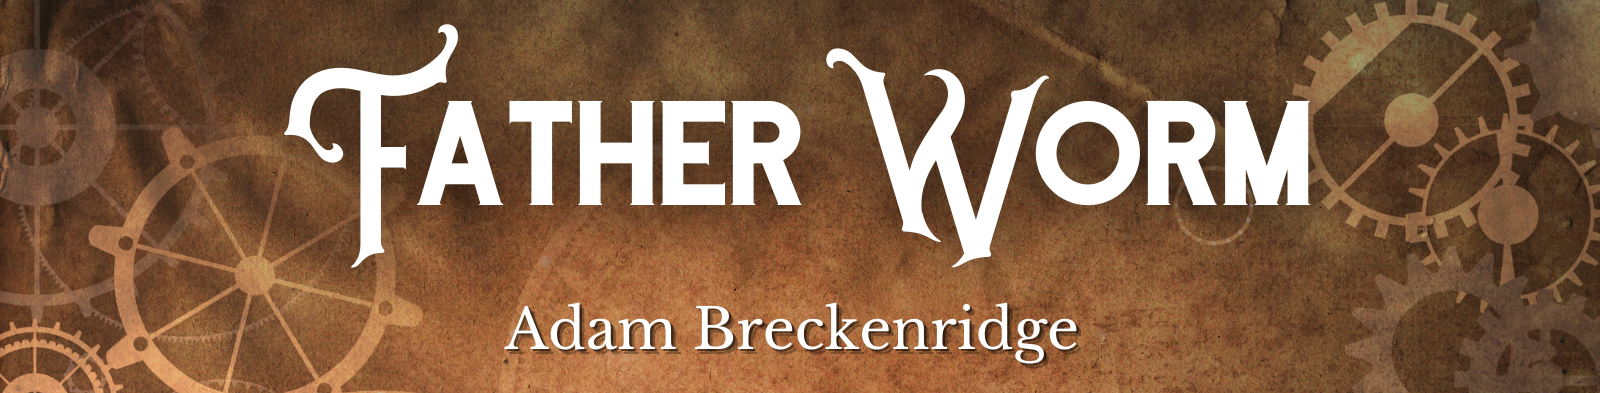 Father Worm by Adam Breckenridge